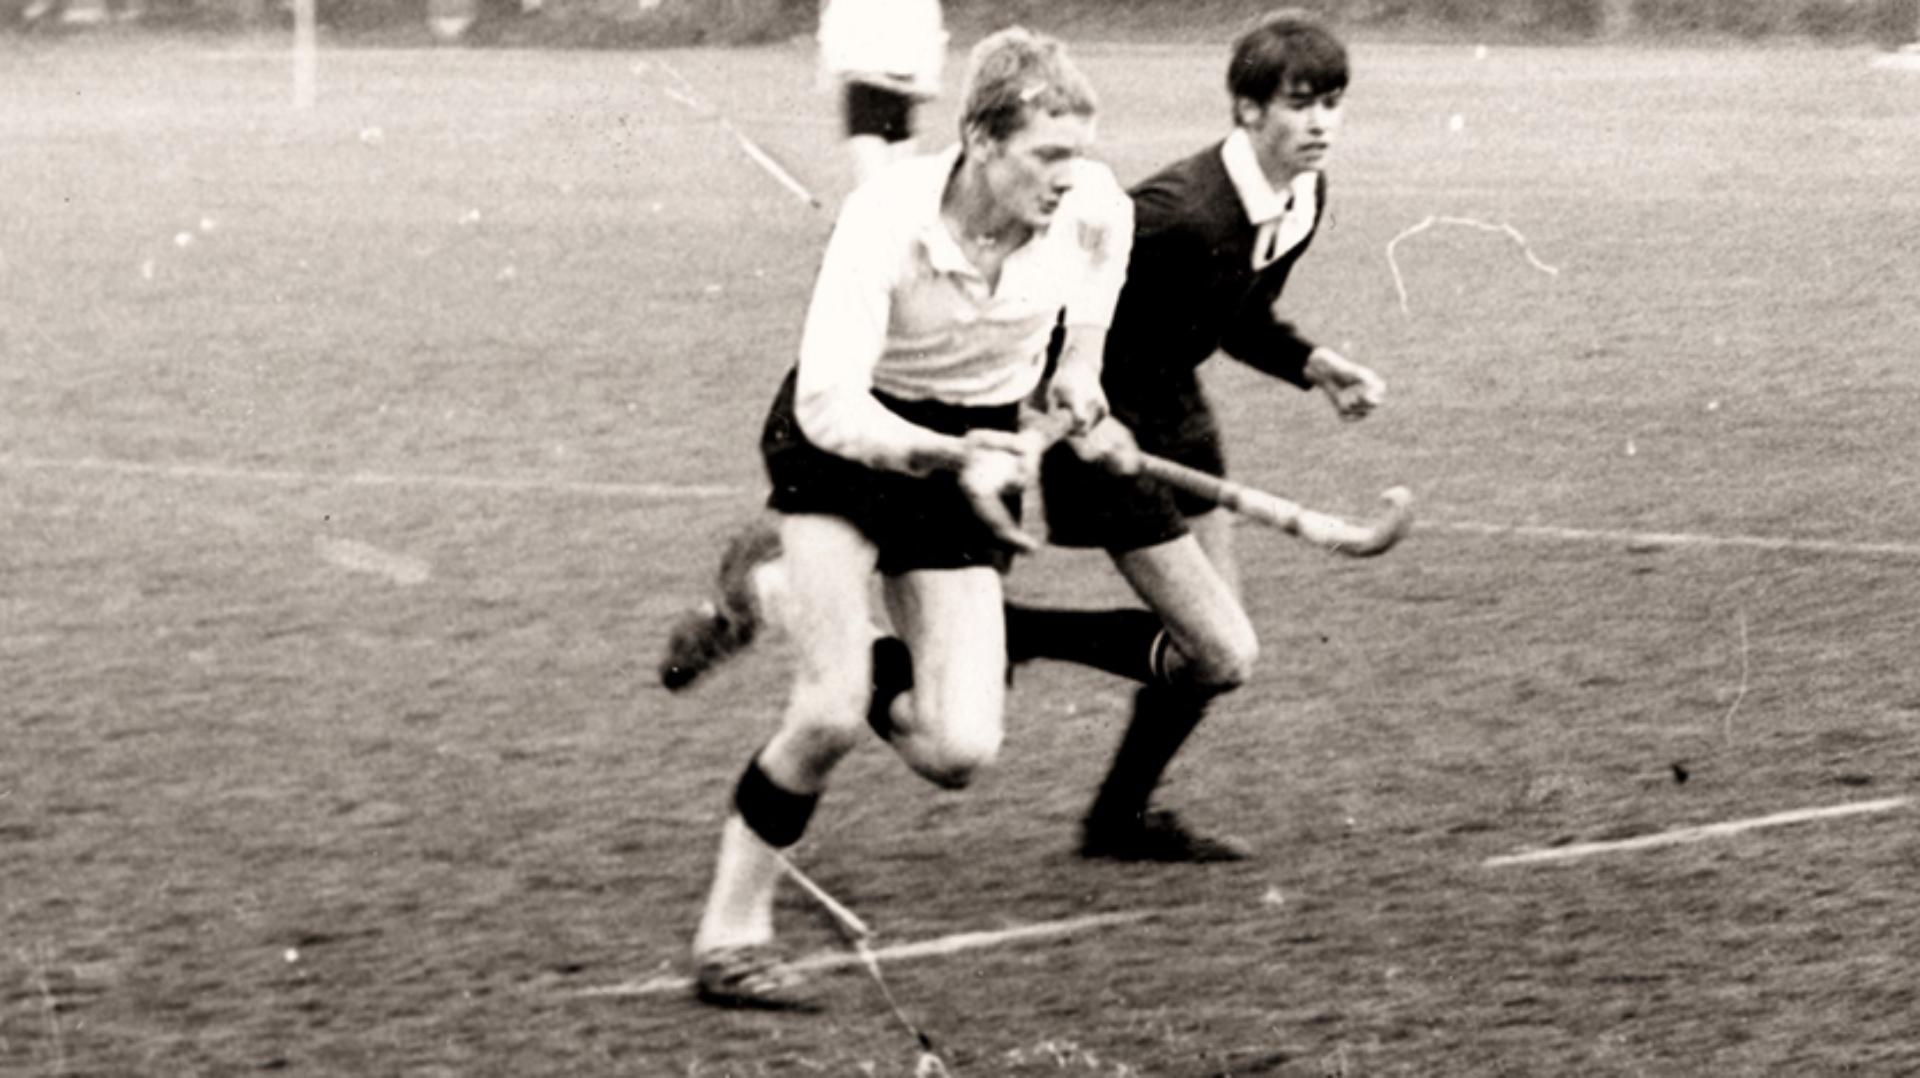 A teenage James Dyson playing hockey